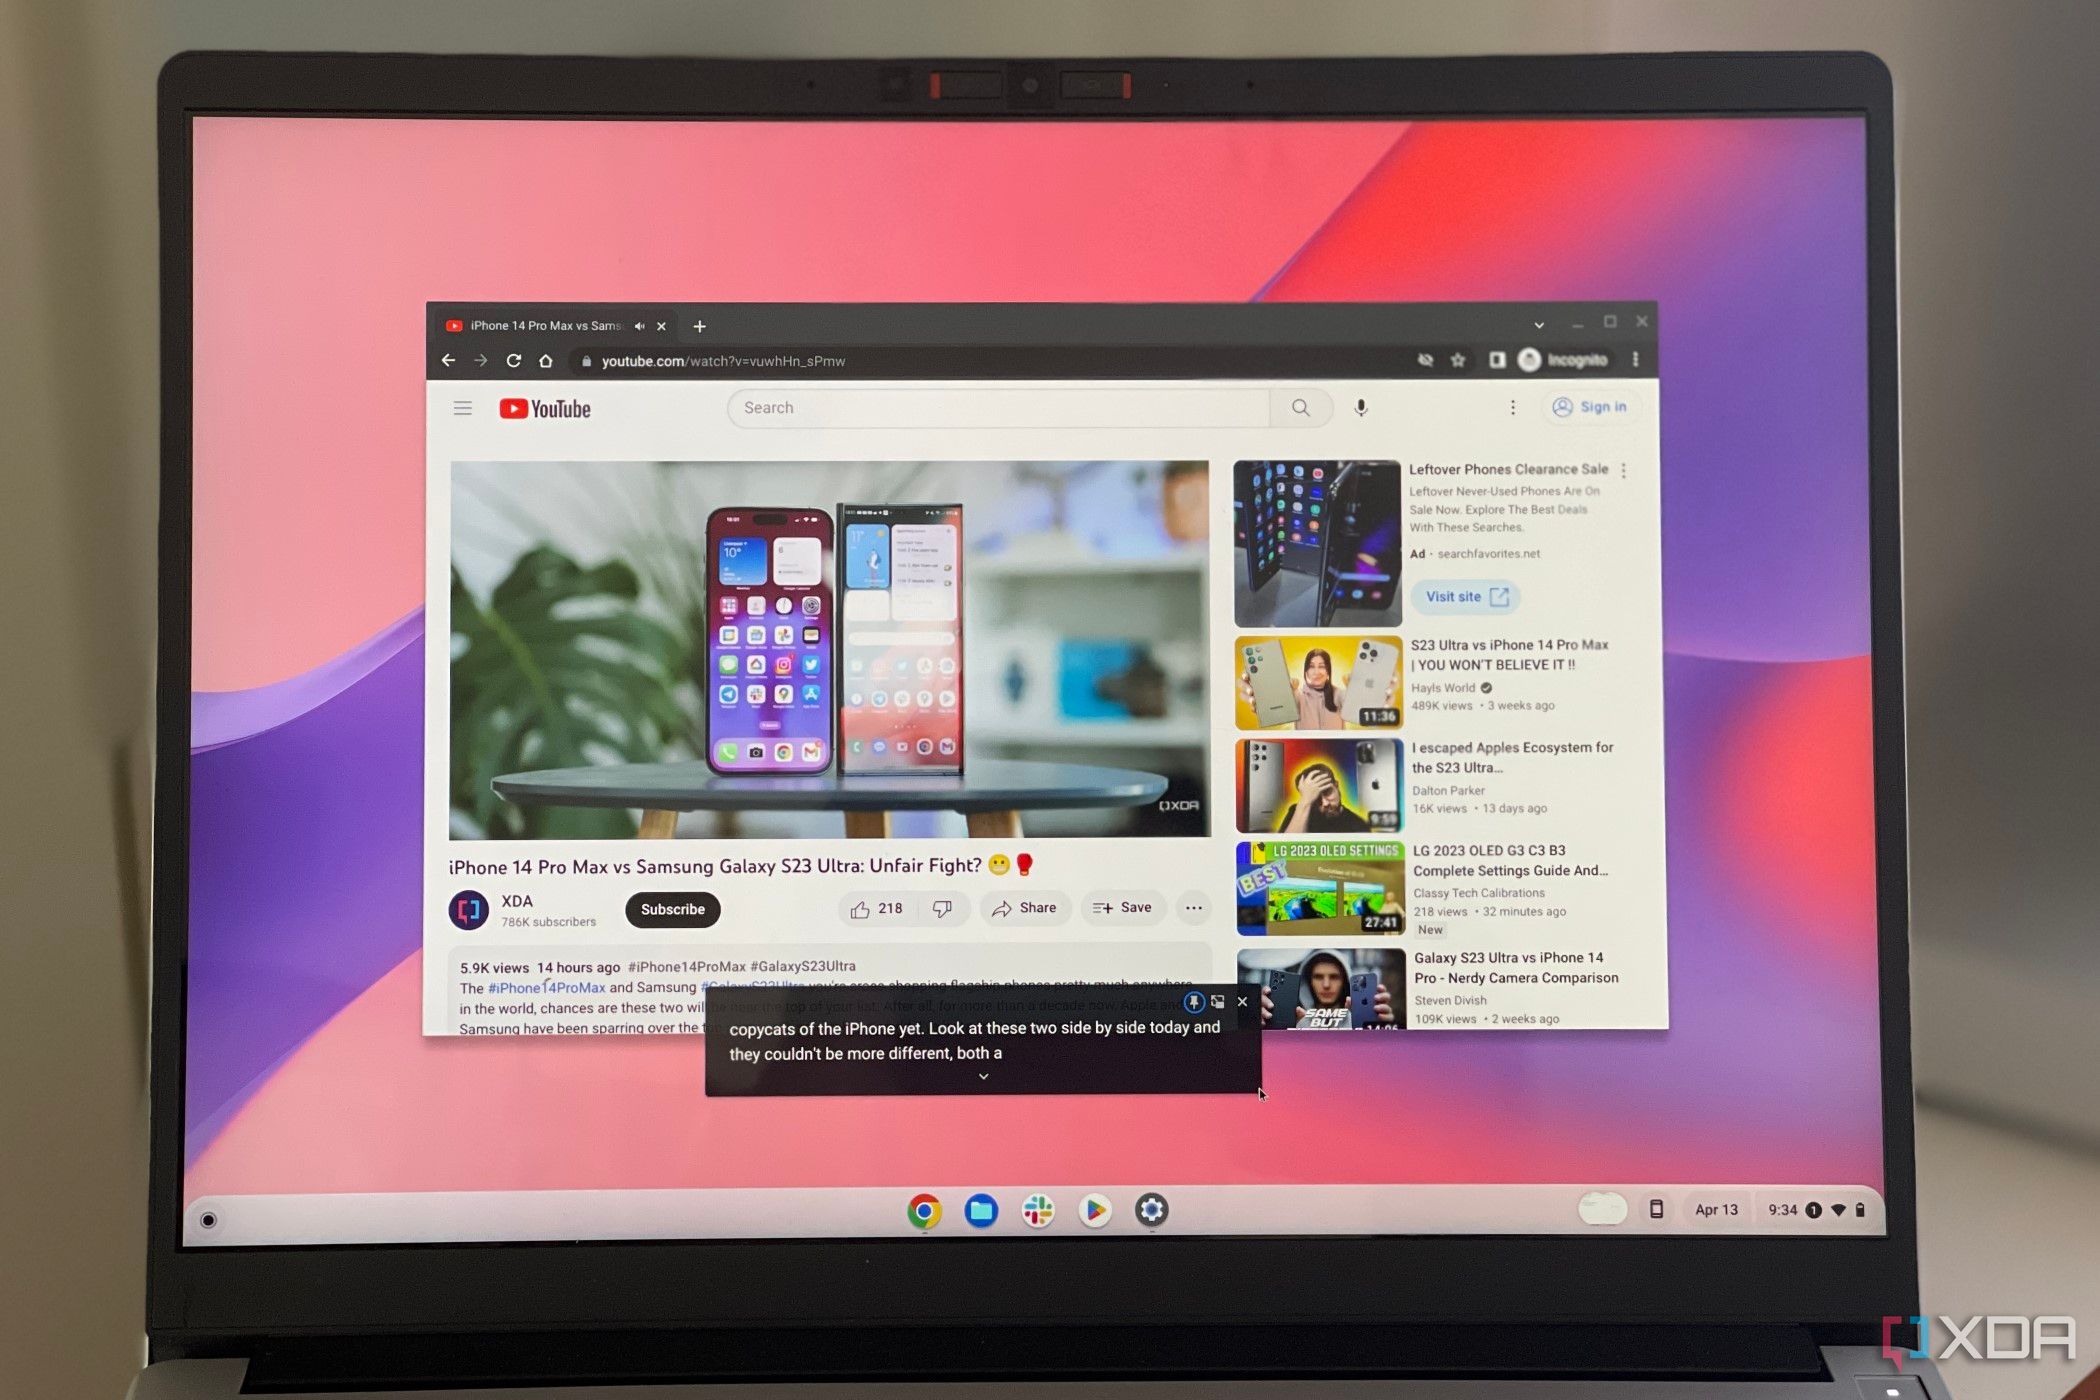 Split screen groups in ChromeOS will appear as apps to enhance multitasking